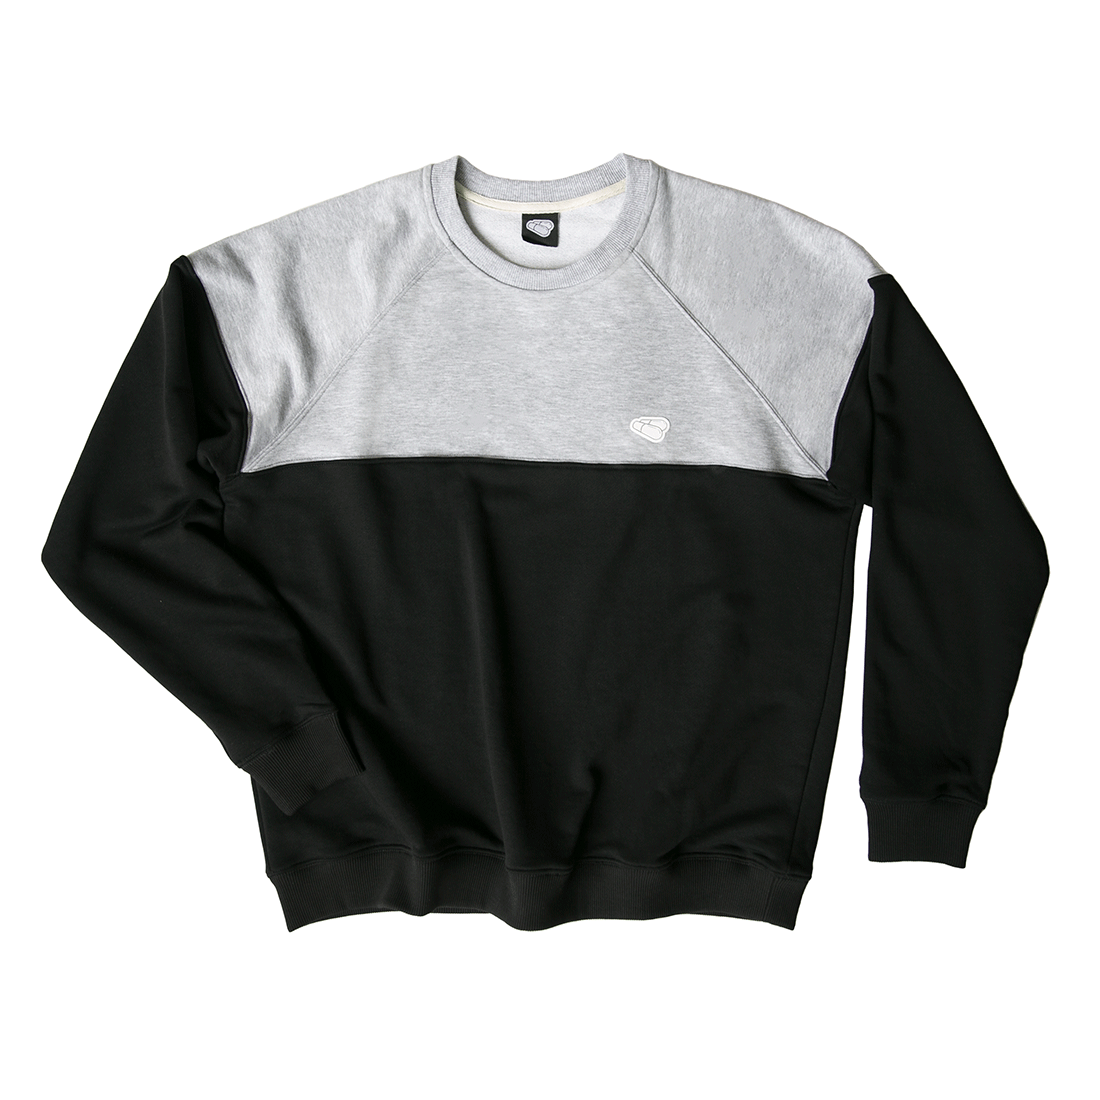 DUAL sweatshirt gray-black PILLS WHEELS